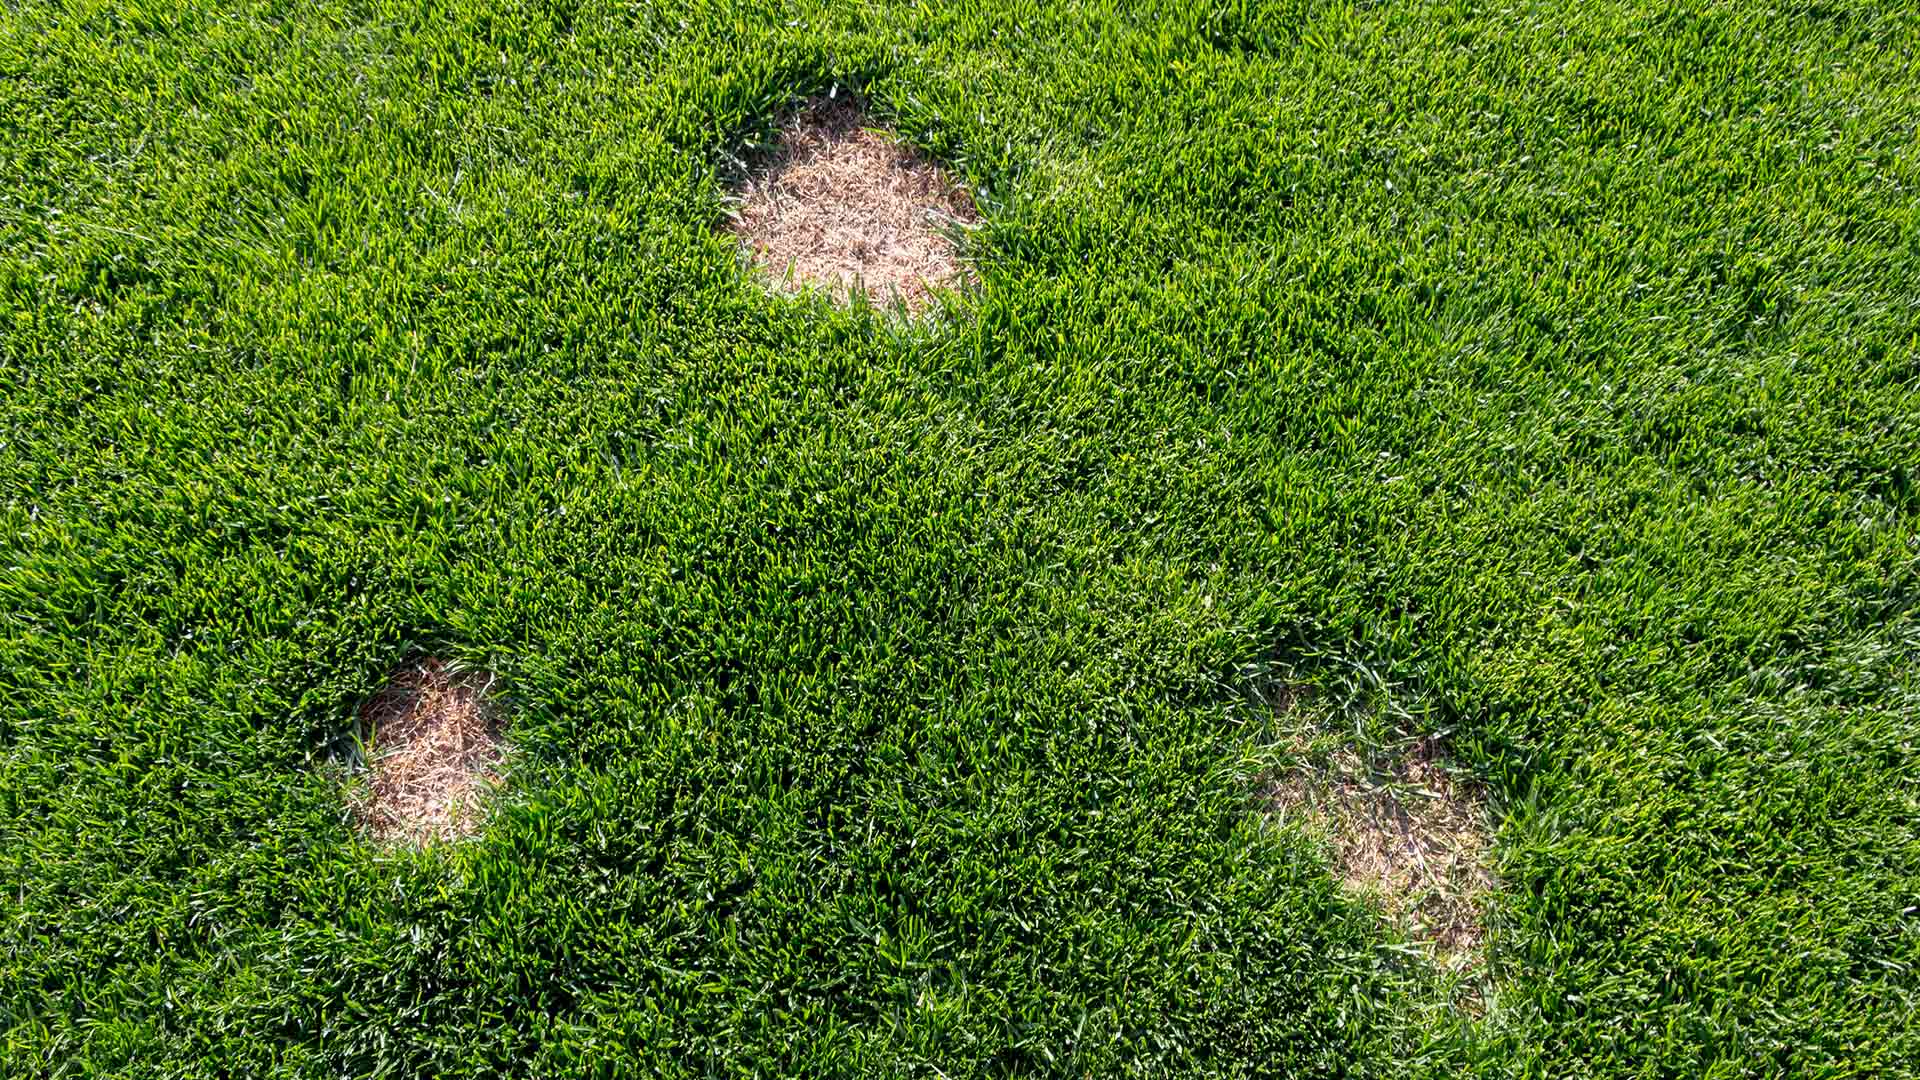 Dollar spot lawn disease at a property in Woodstock, GA.